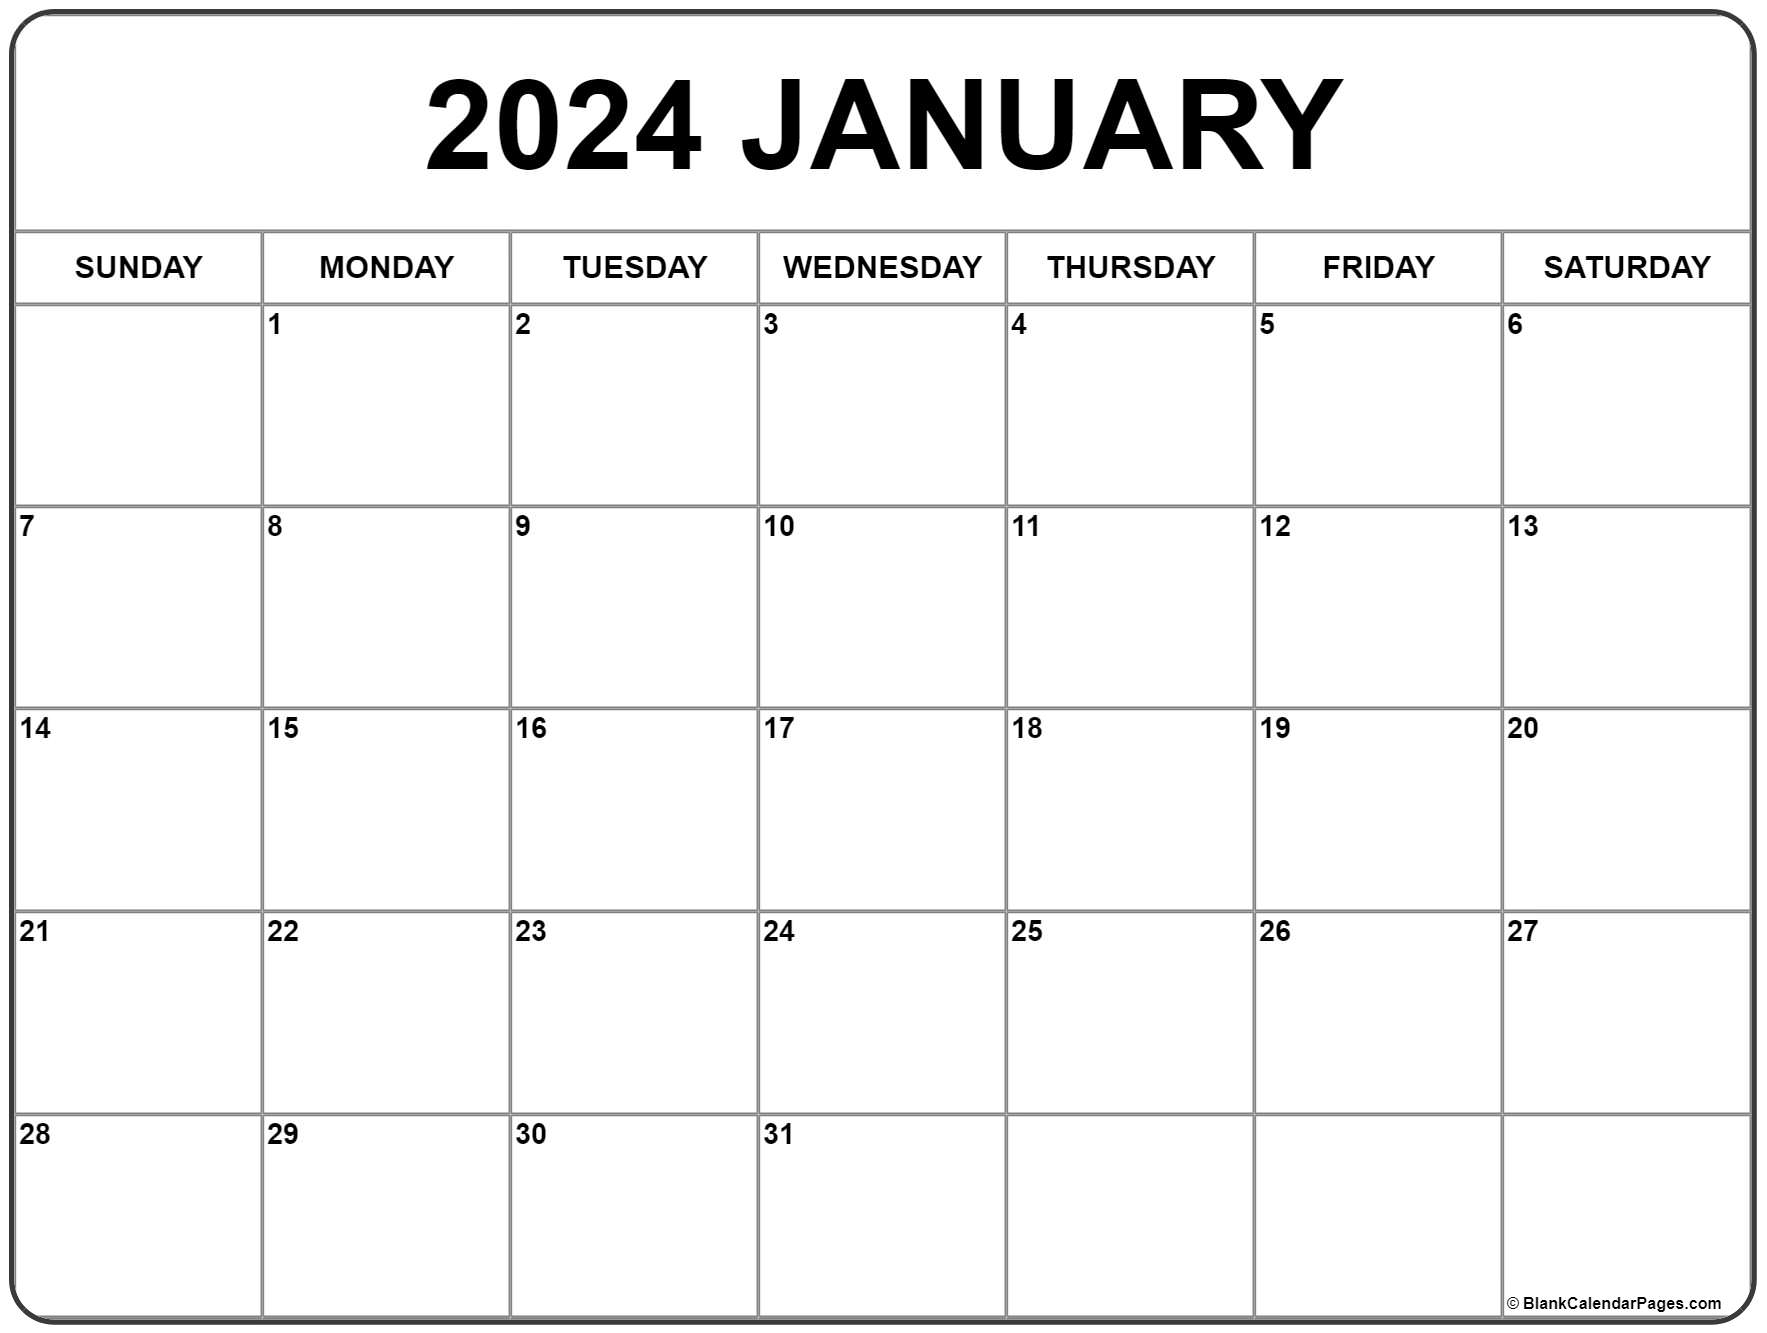 Calendar Of January 2021 January 2021 calendar | free printable monthly calendars